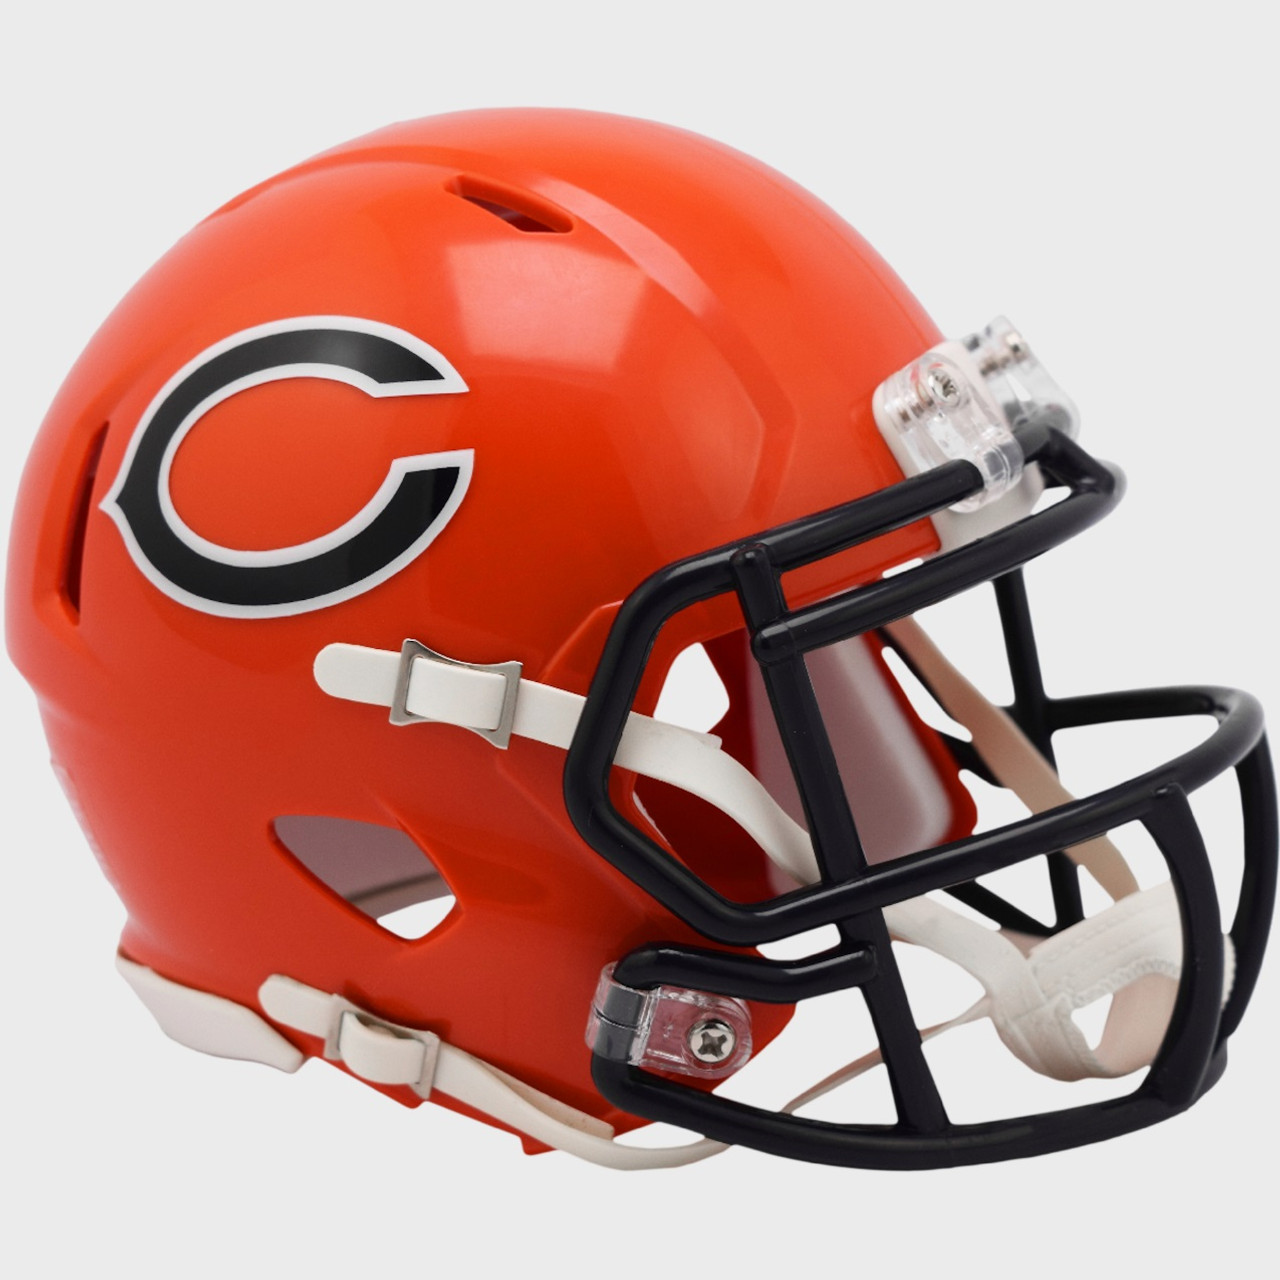 NFL world reacts to Chicago Bears new orange helmets